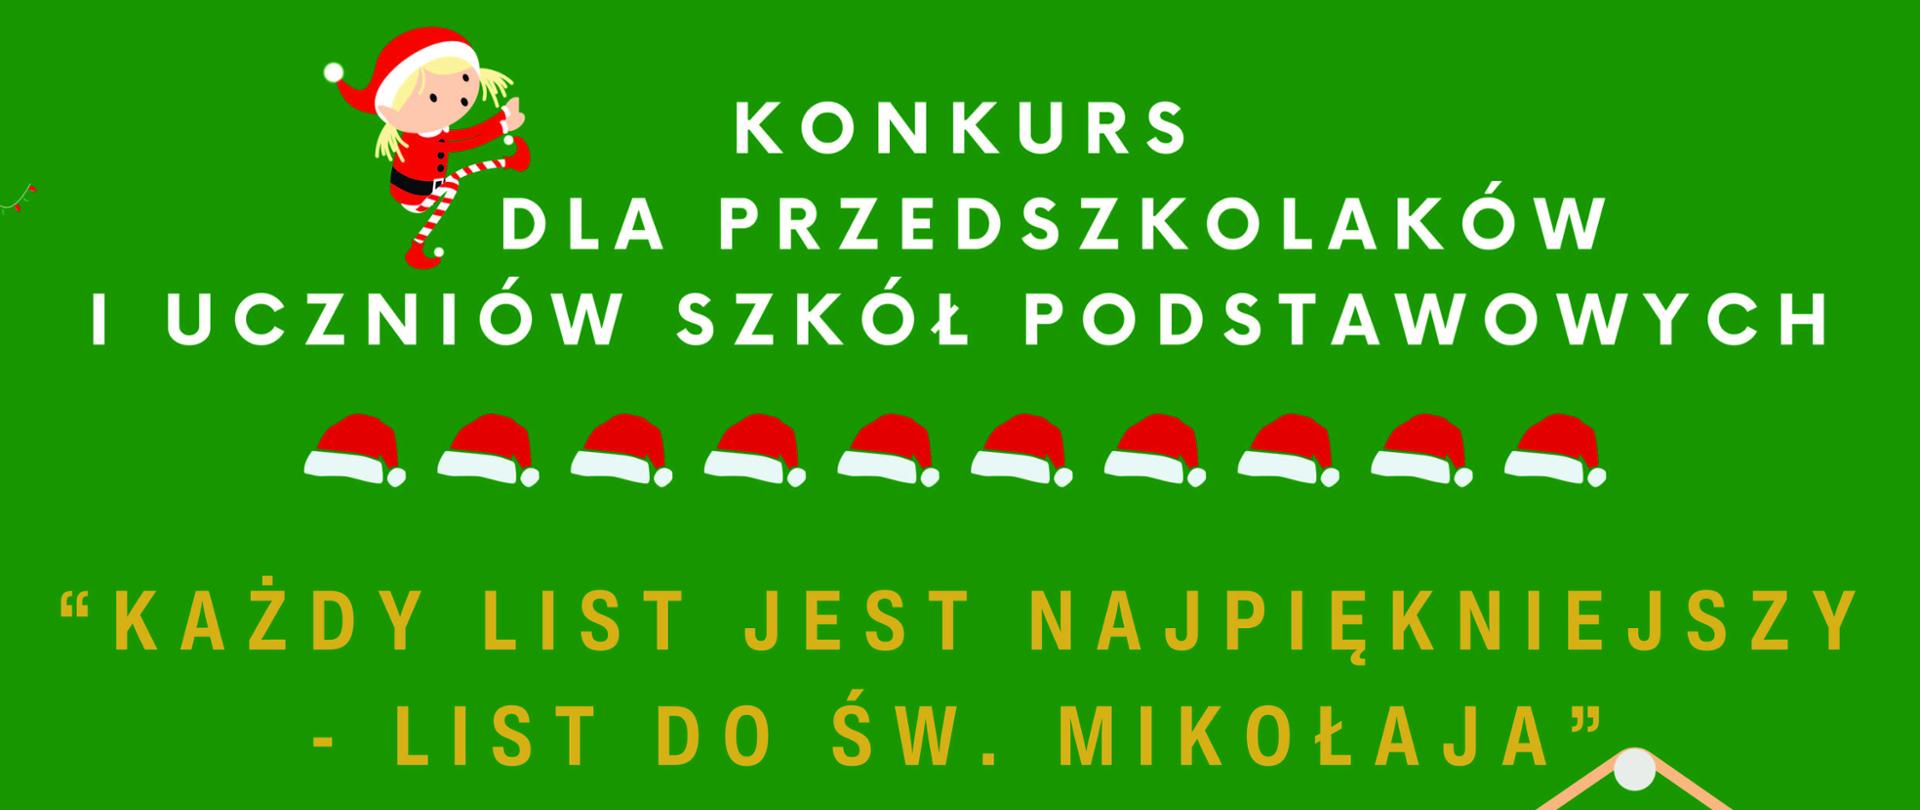 Plakat konkurs list do świętego Mikołaja